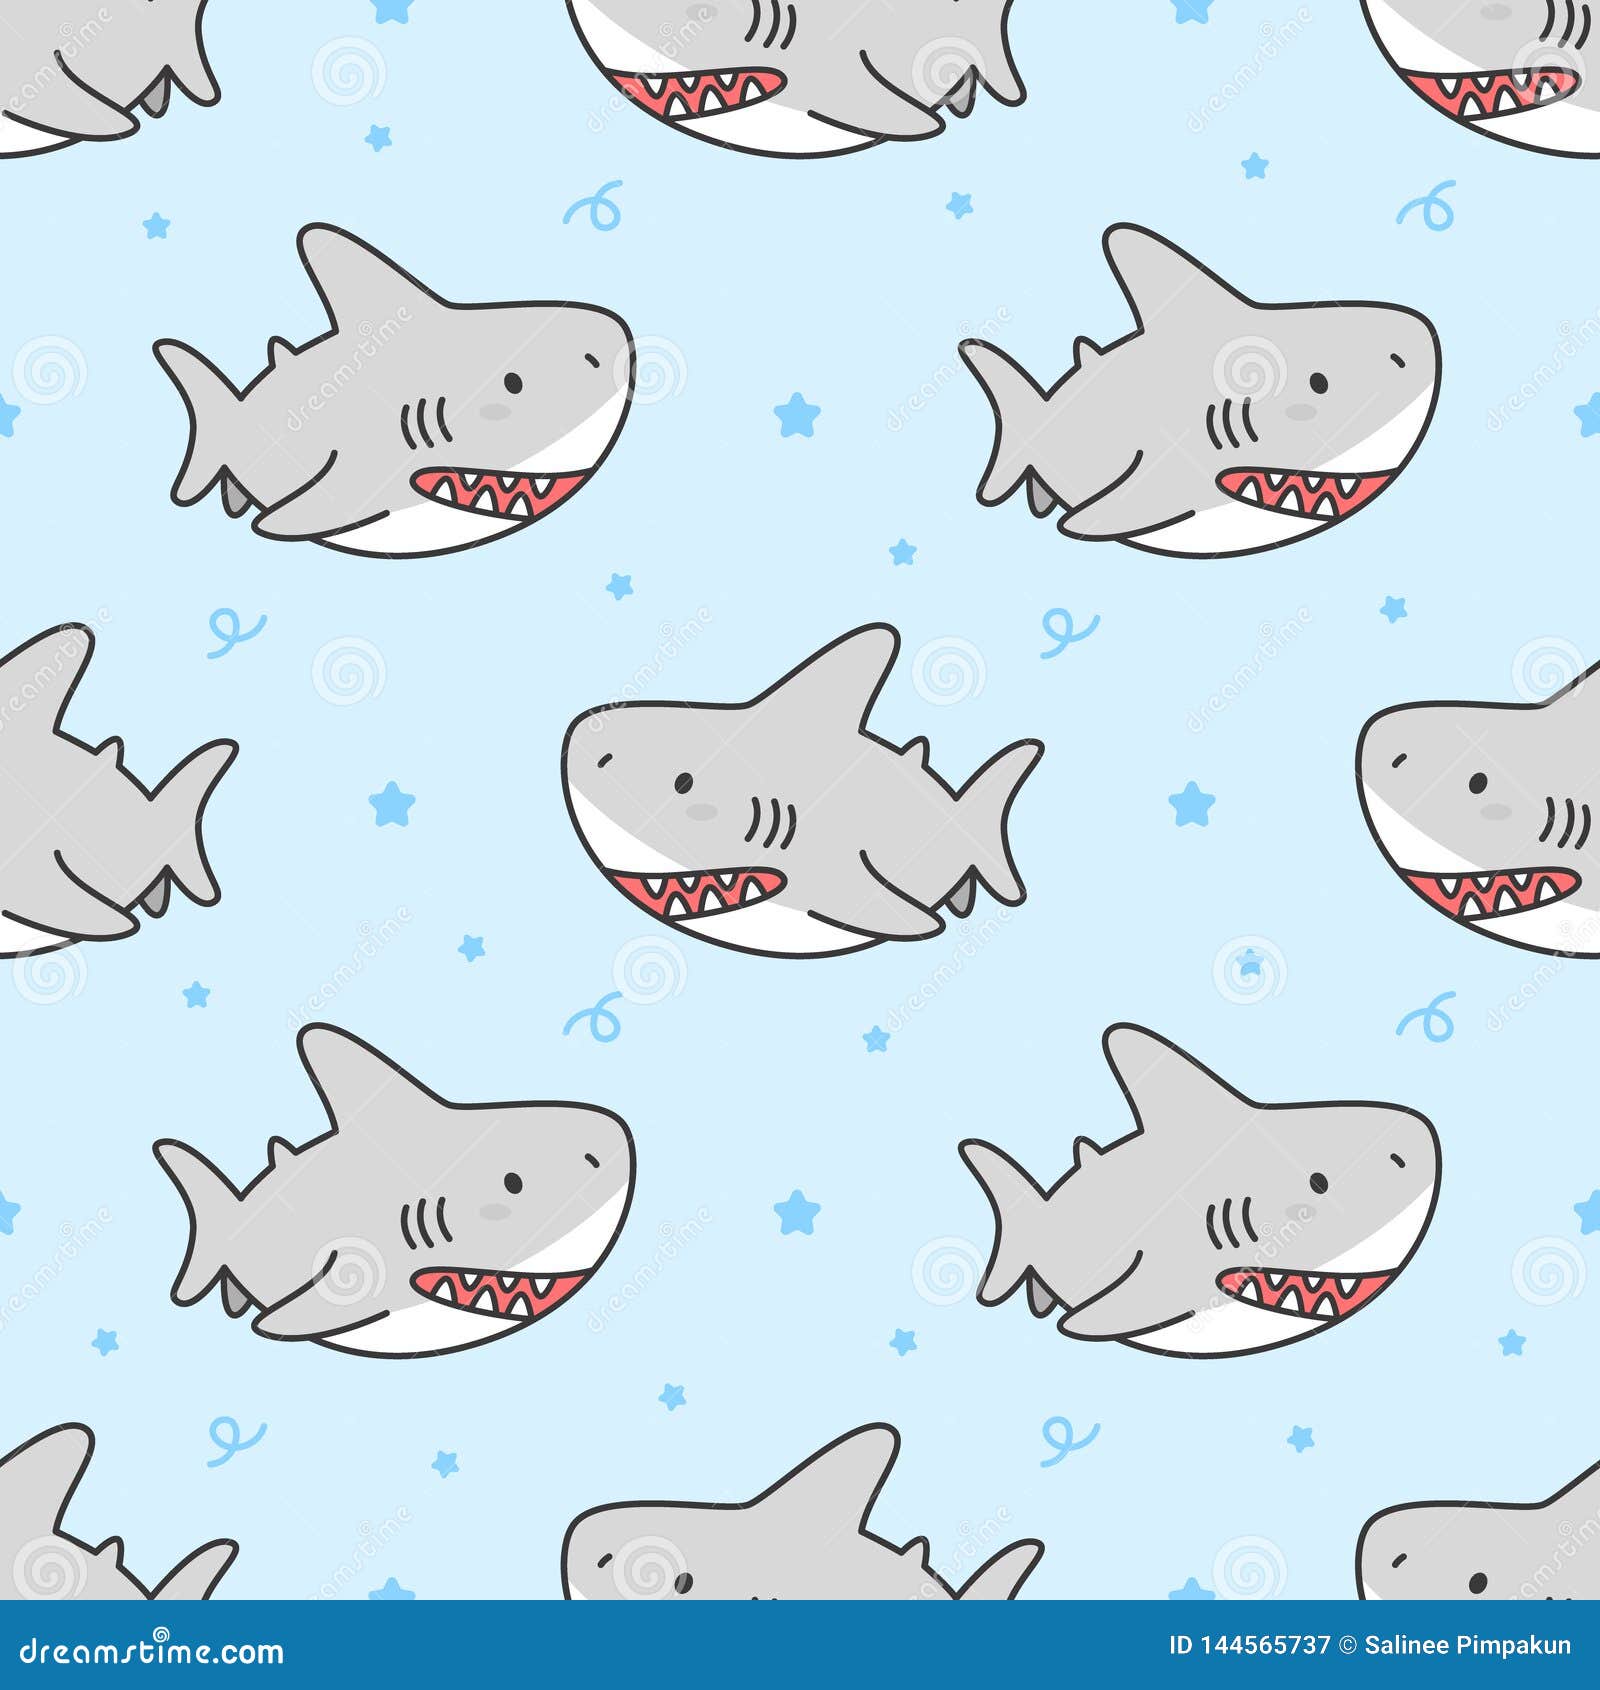 2500 Cute Shark Backgrounds Illustrations RoyaltyFree Vector Graphics   Clip Art  iStock